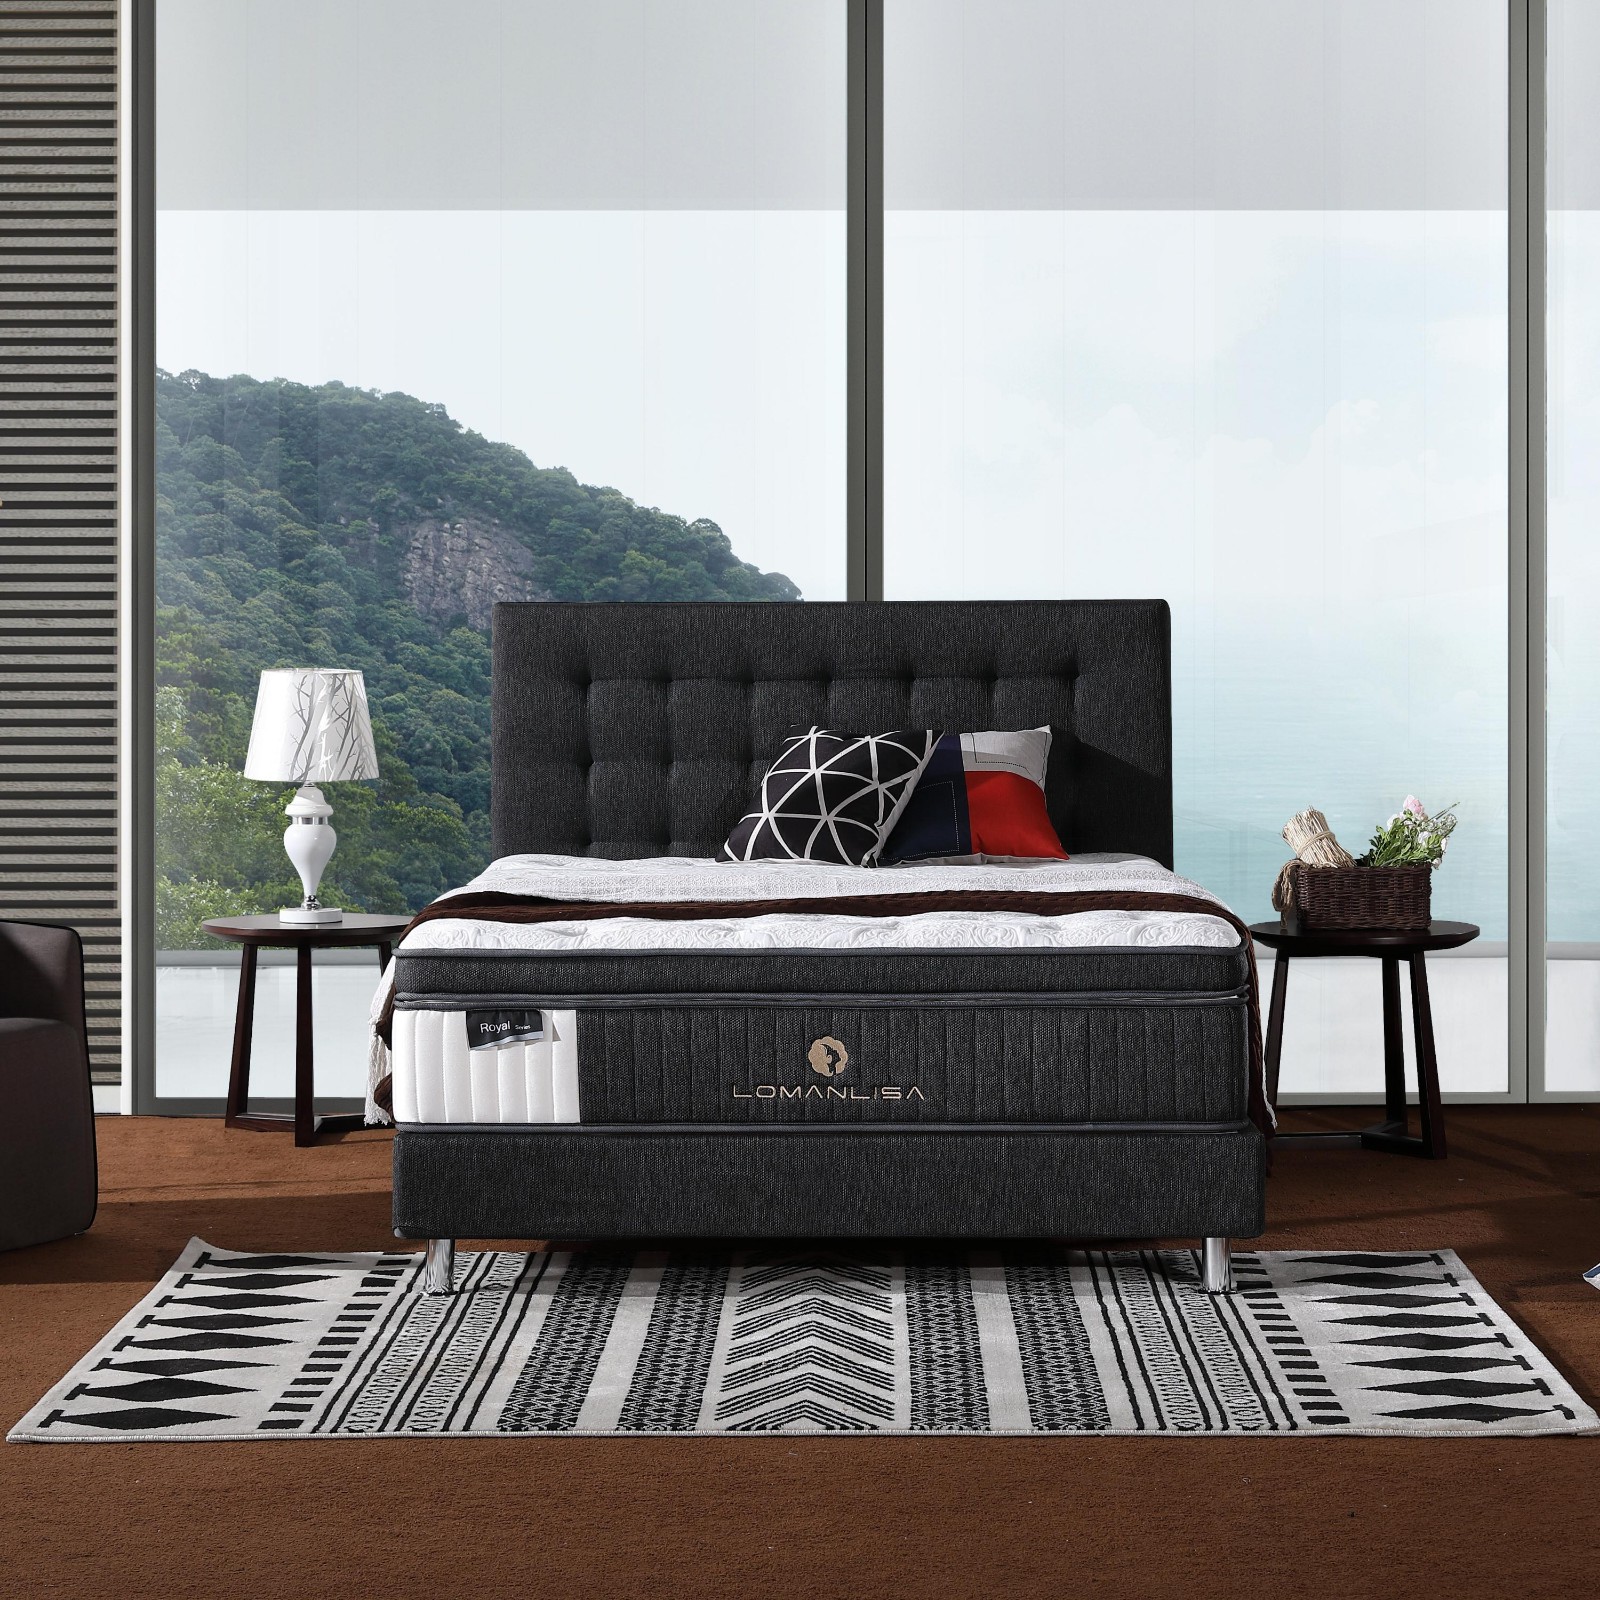 JLH best wool mattress topper Certified for bedroom-13